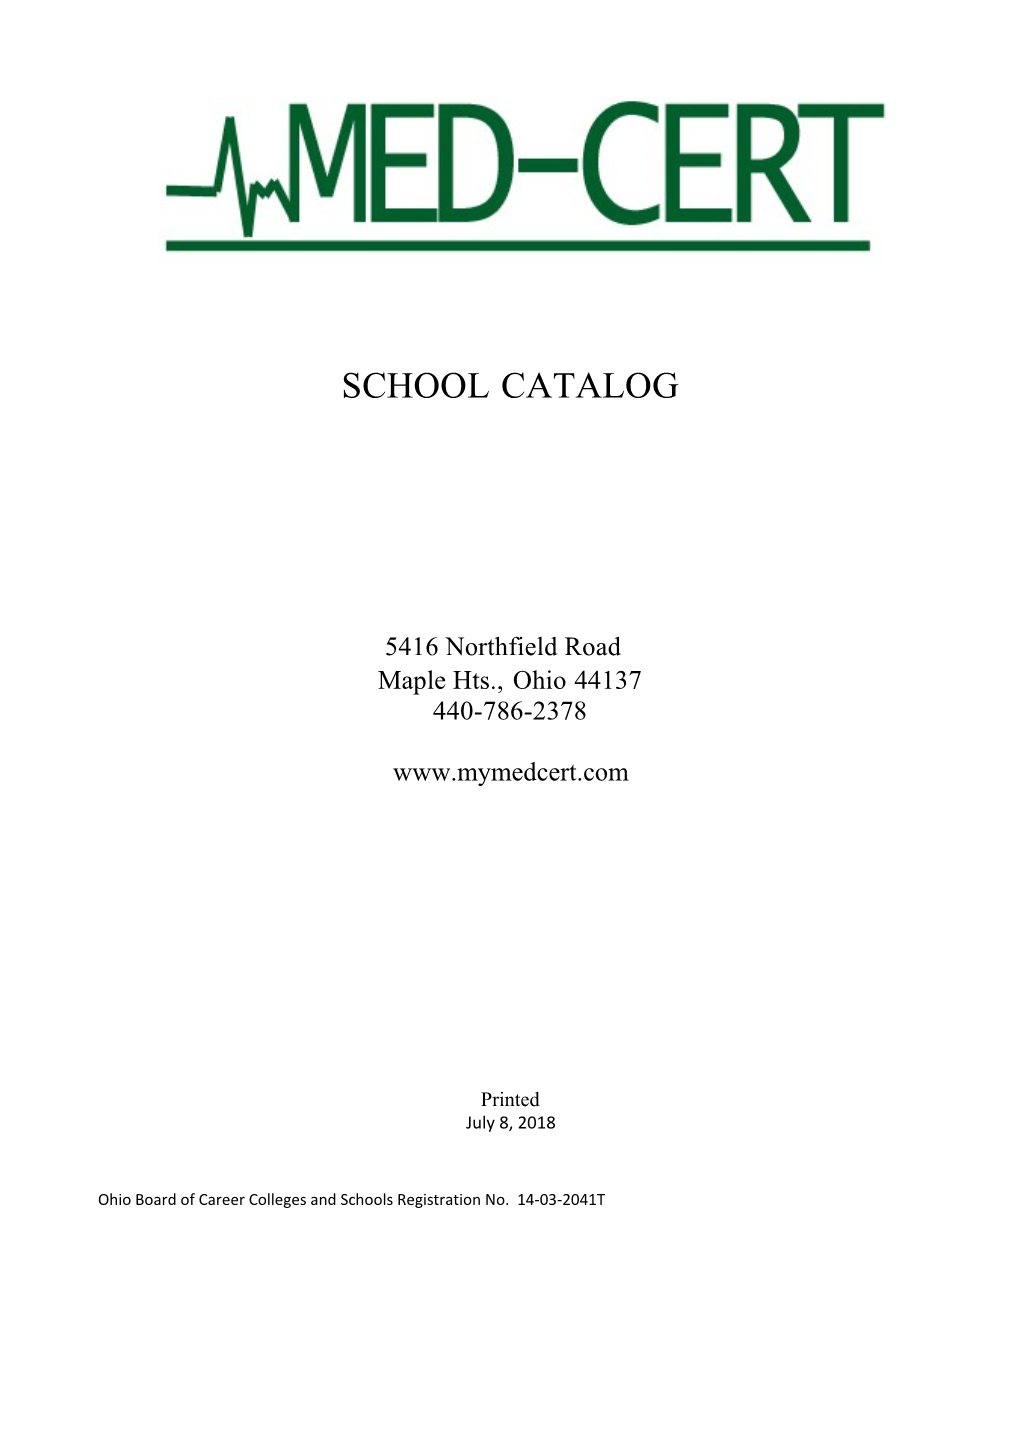 School Catalog Version 12.27.2013